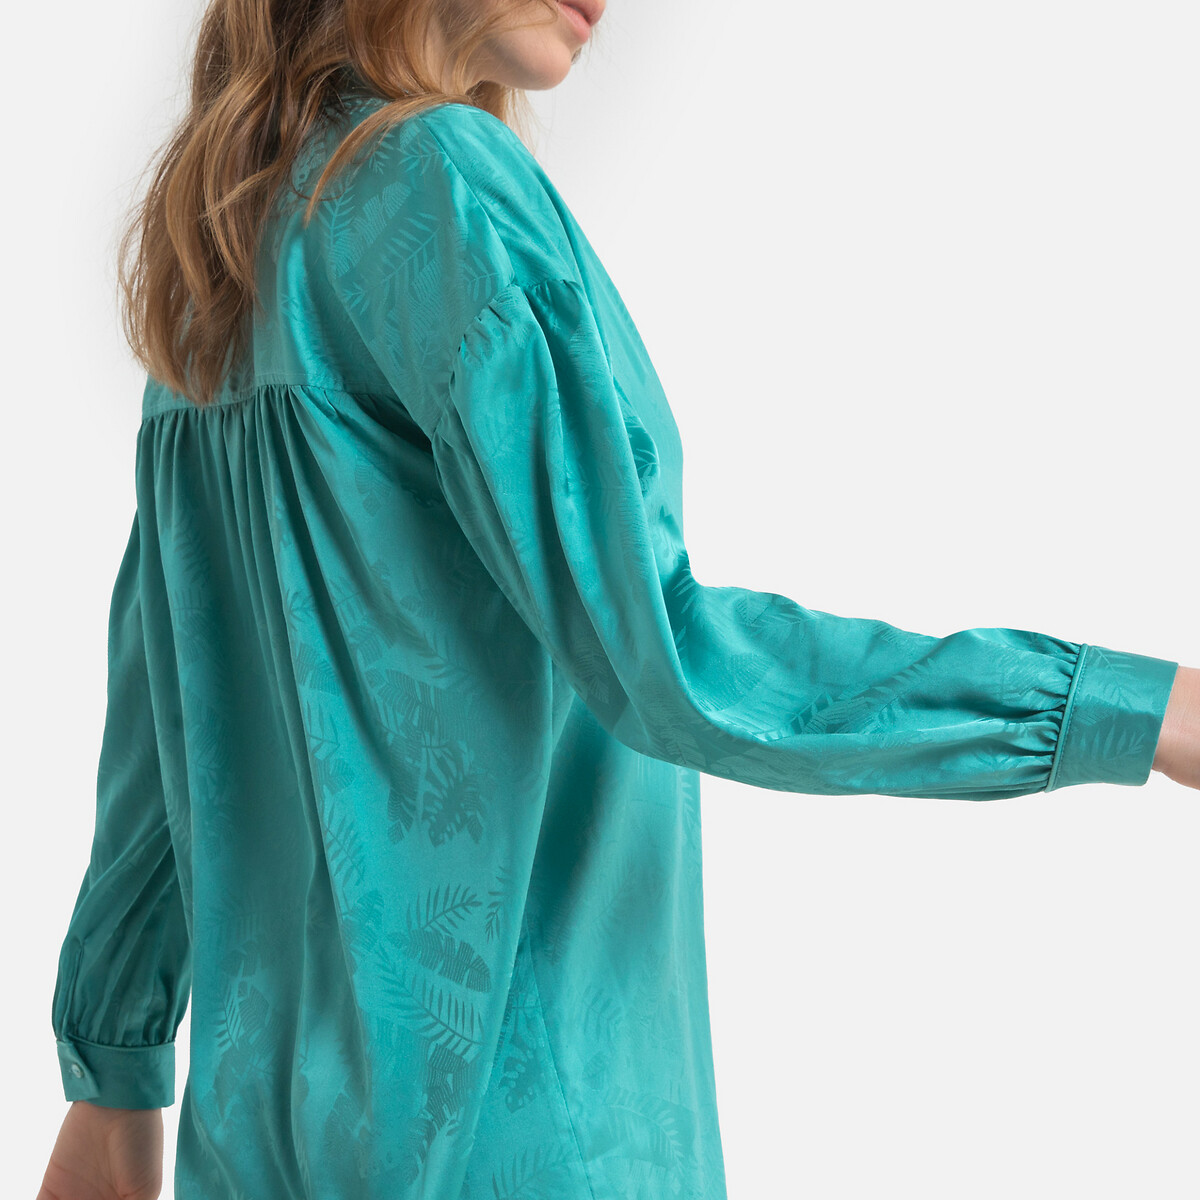 Ночная LaRedoute Рубашка в форме пижамы из сатина 40 (FR) - 46 (RUS) зеленый, размер 40 (FR) - 46 (RUS) Рубашка в форме пижамы из сатина 40 (FR) - 46 (RUS) зеленый - фото 3